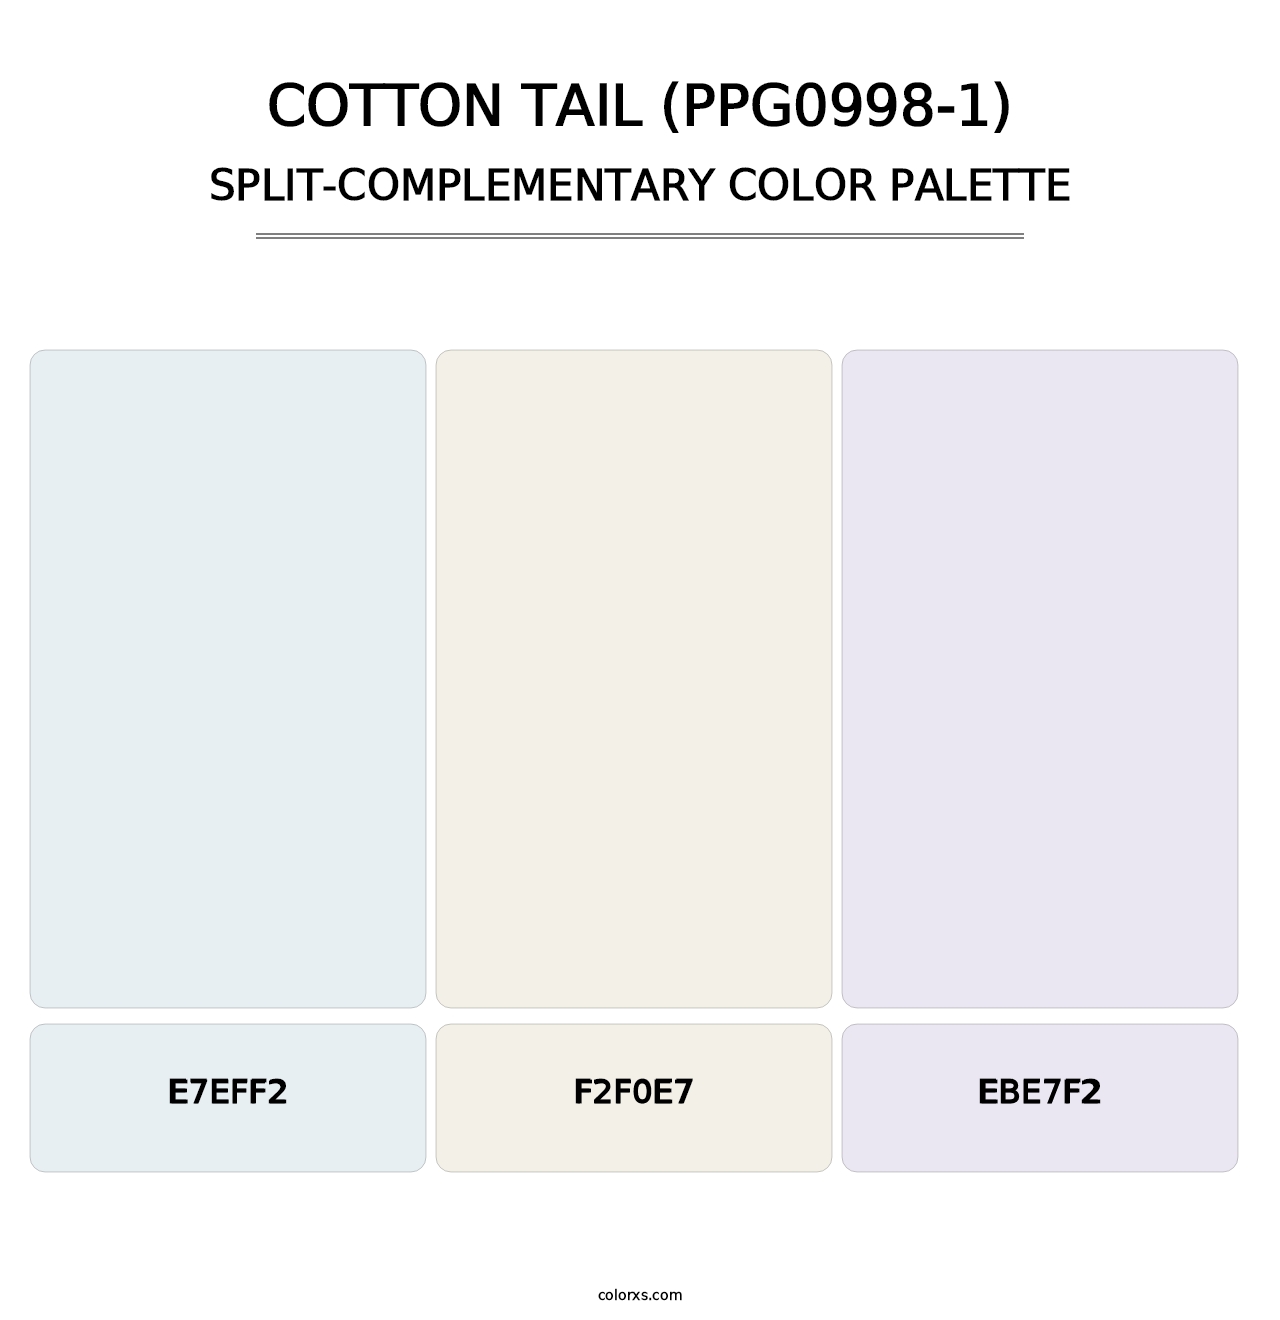 Cotton Tail (PPG0998-1) - Split-Complementary Color Palette